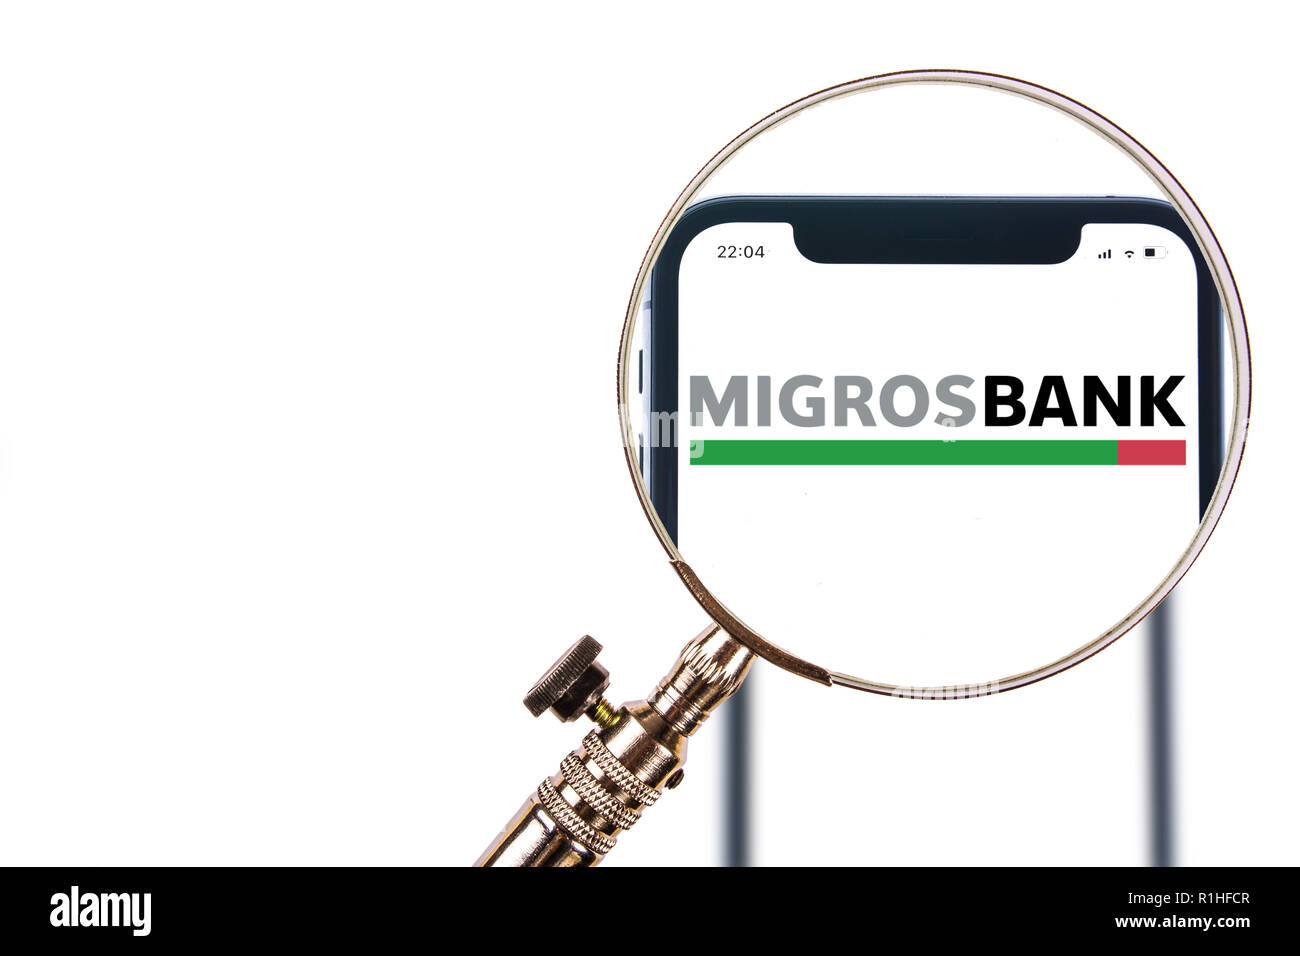 SOLOTHURN, SWITZERLAND - NOVEMBER 12, 2018: Migros Bank logo displayed on a modern smartphone Stock Photo